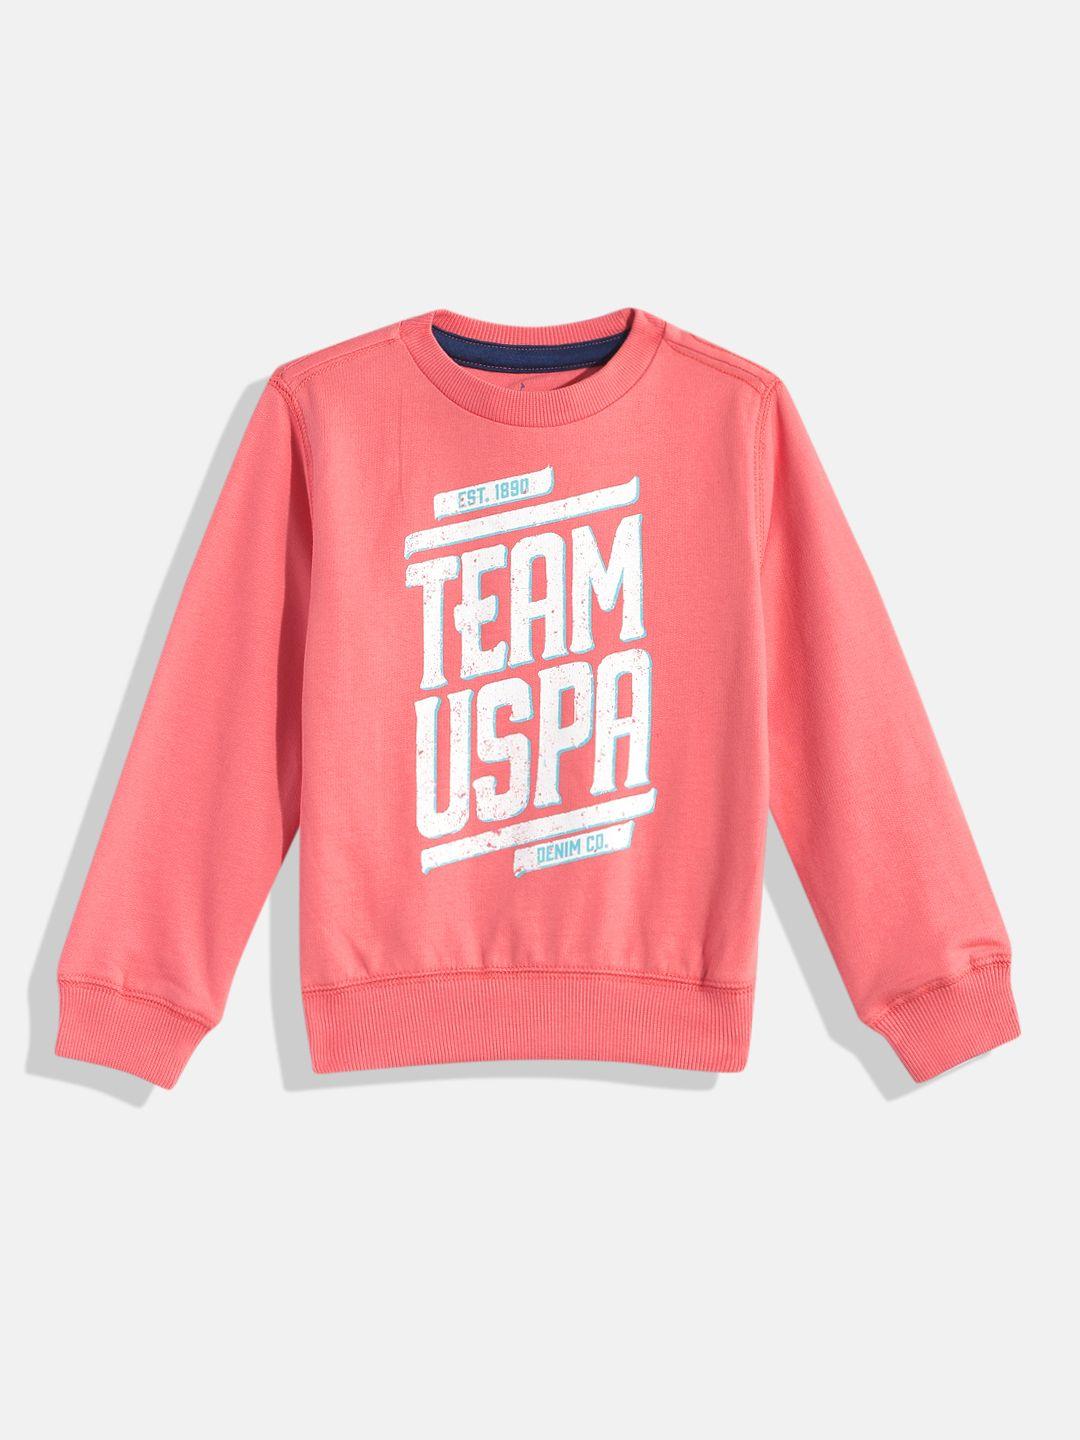 u.s. polo assn. kids boys coral pink brand logo printed pure cotton sweatshirt